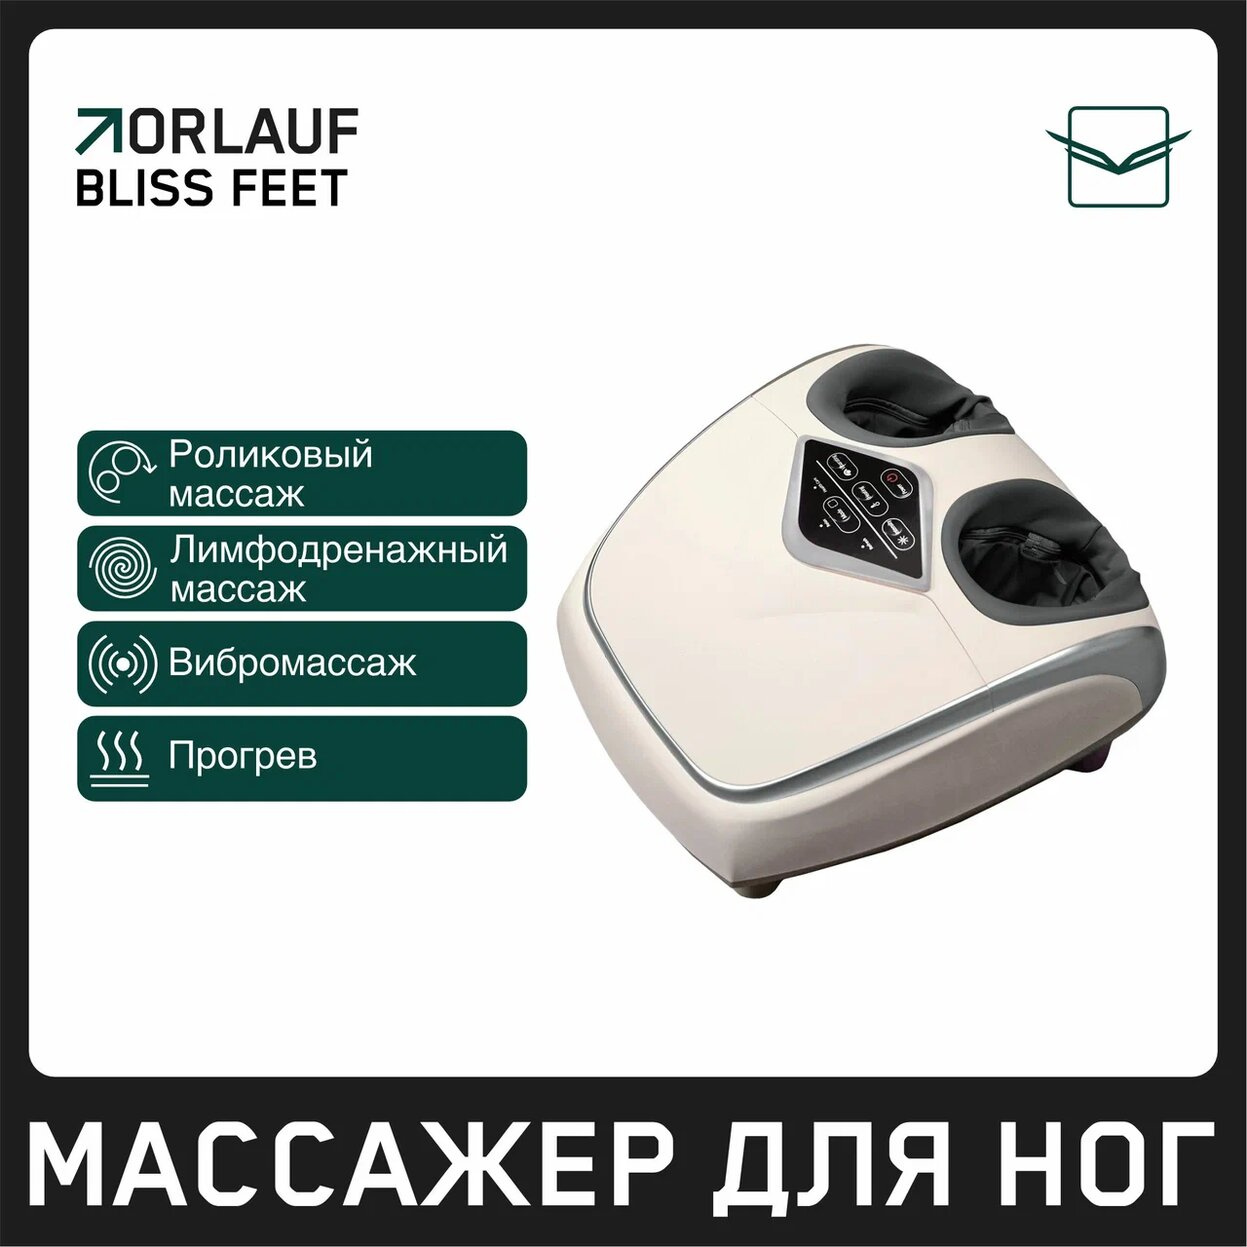 Orlauf Bliss Feet из каталога спецпредложений в Санкт-Петербурге по цене 27600 ₽